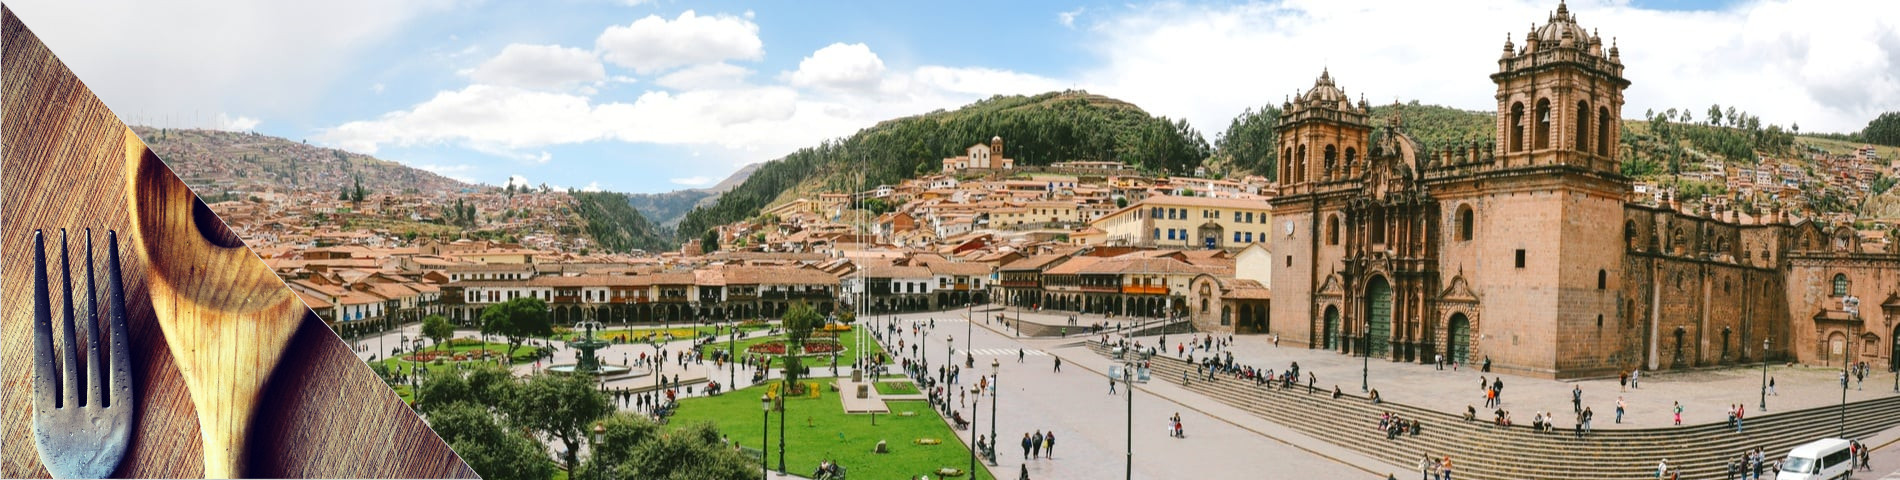 Cuzco - Spanyol  & főzés